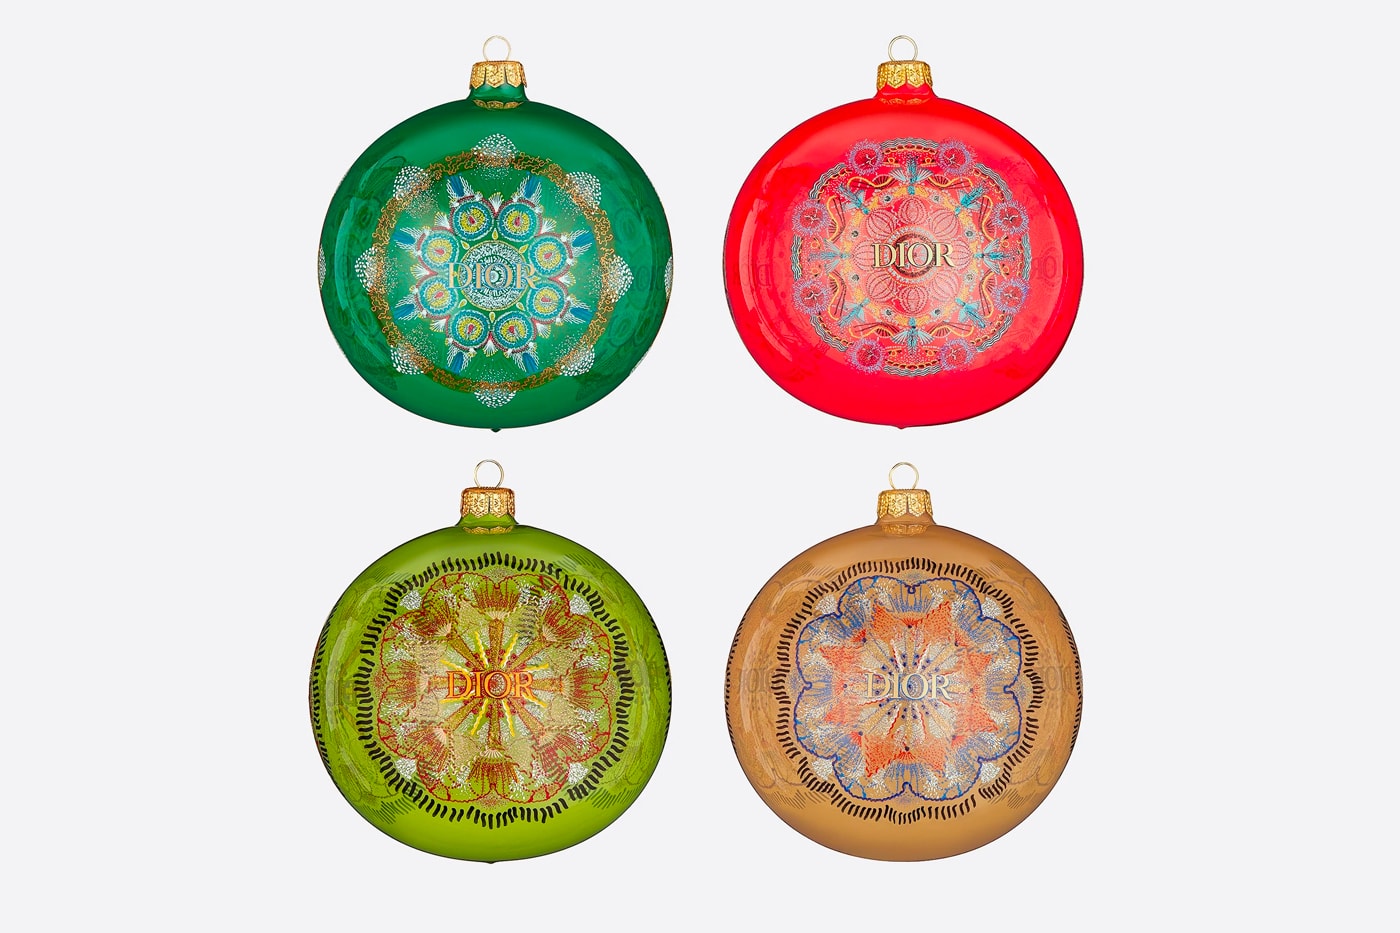 Dior Luminarie Set of 4 Christmas Ornaments Release Maria Grazia Chiuri  Cruise Collection Xmas Luxury Premium Glass Ornaments bulbs 